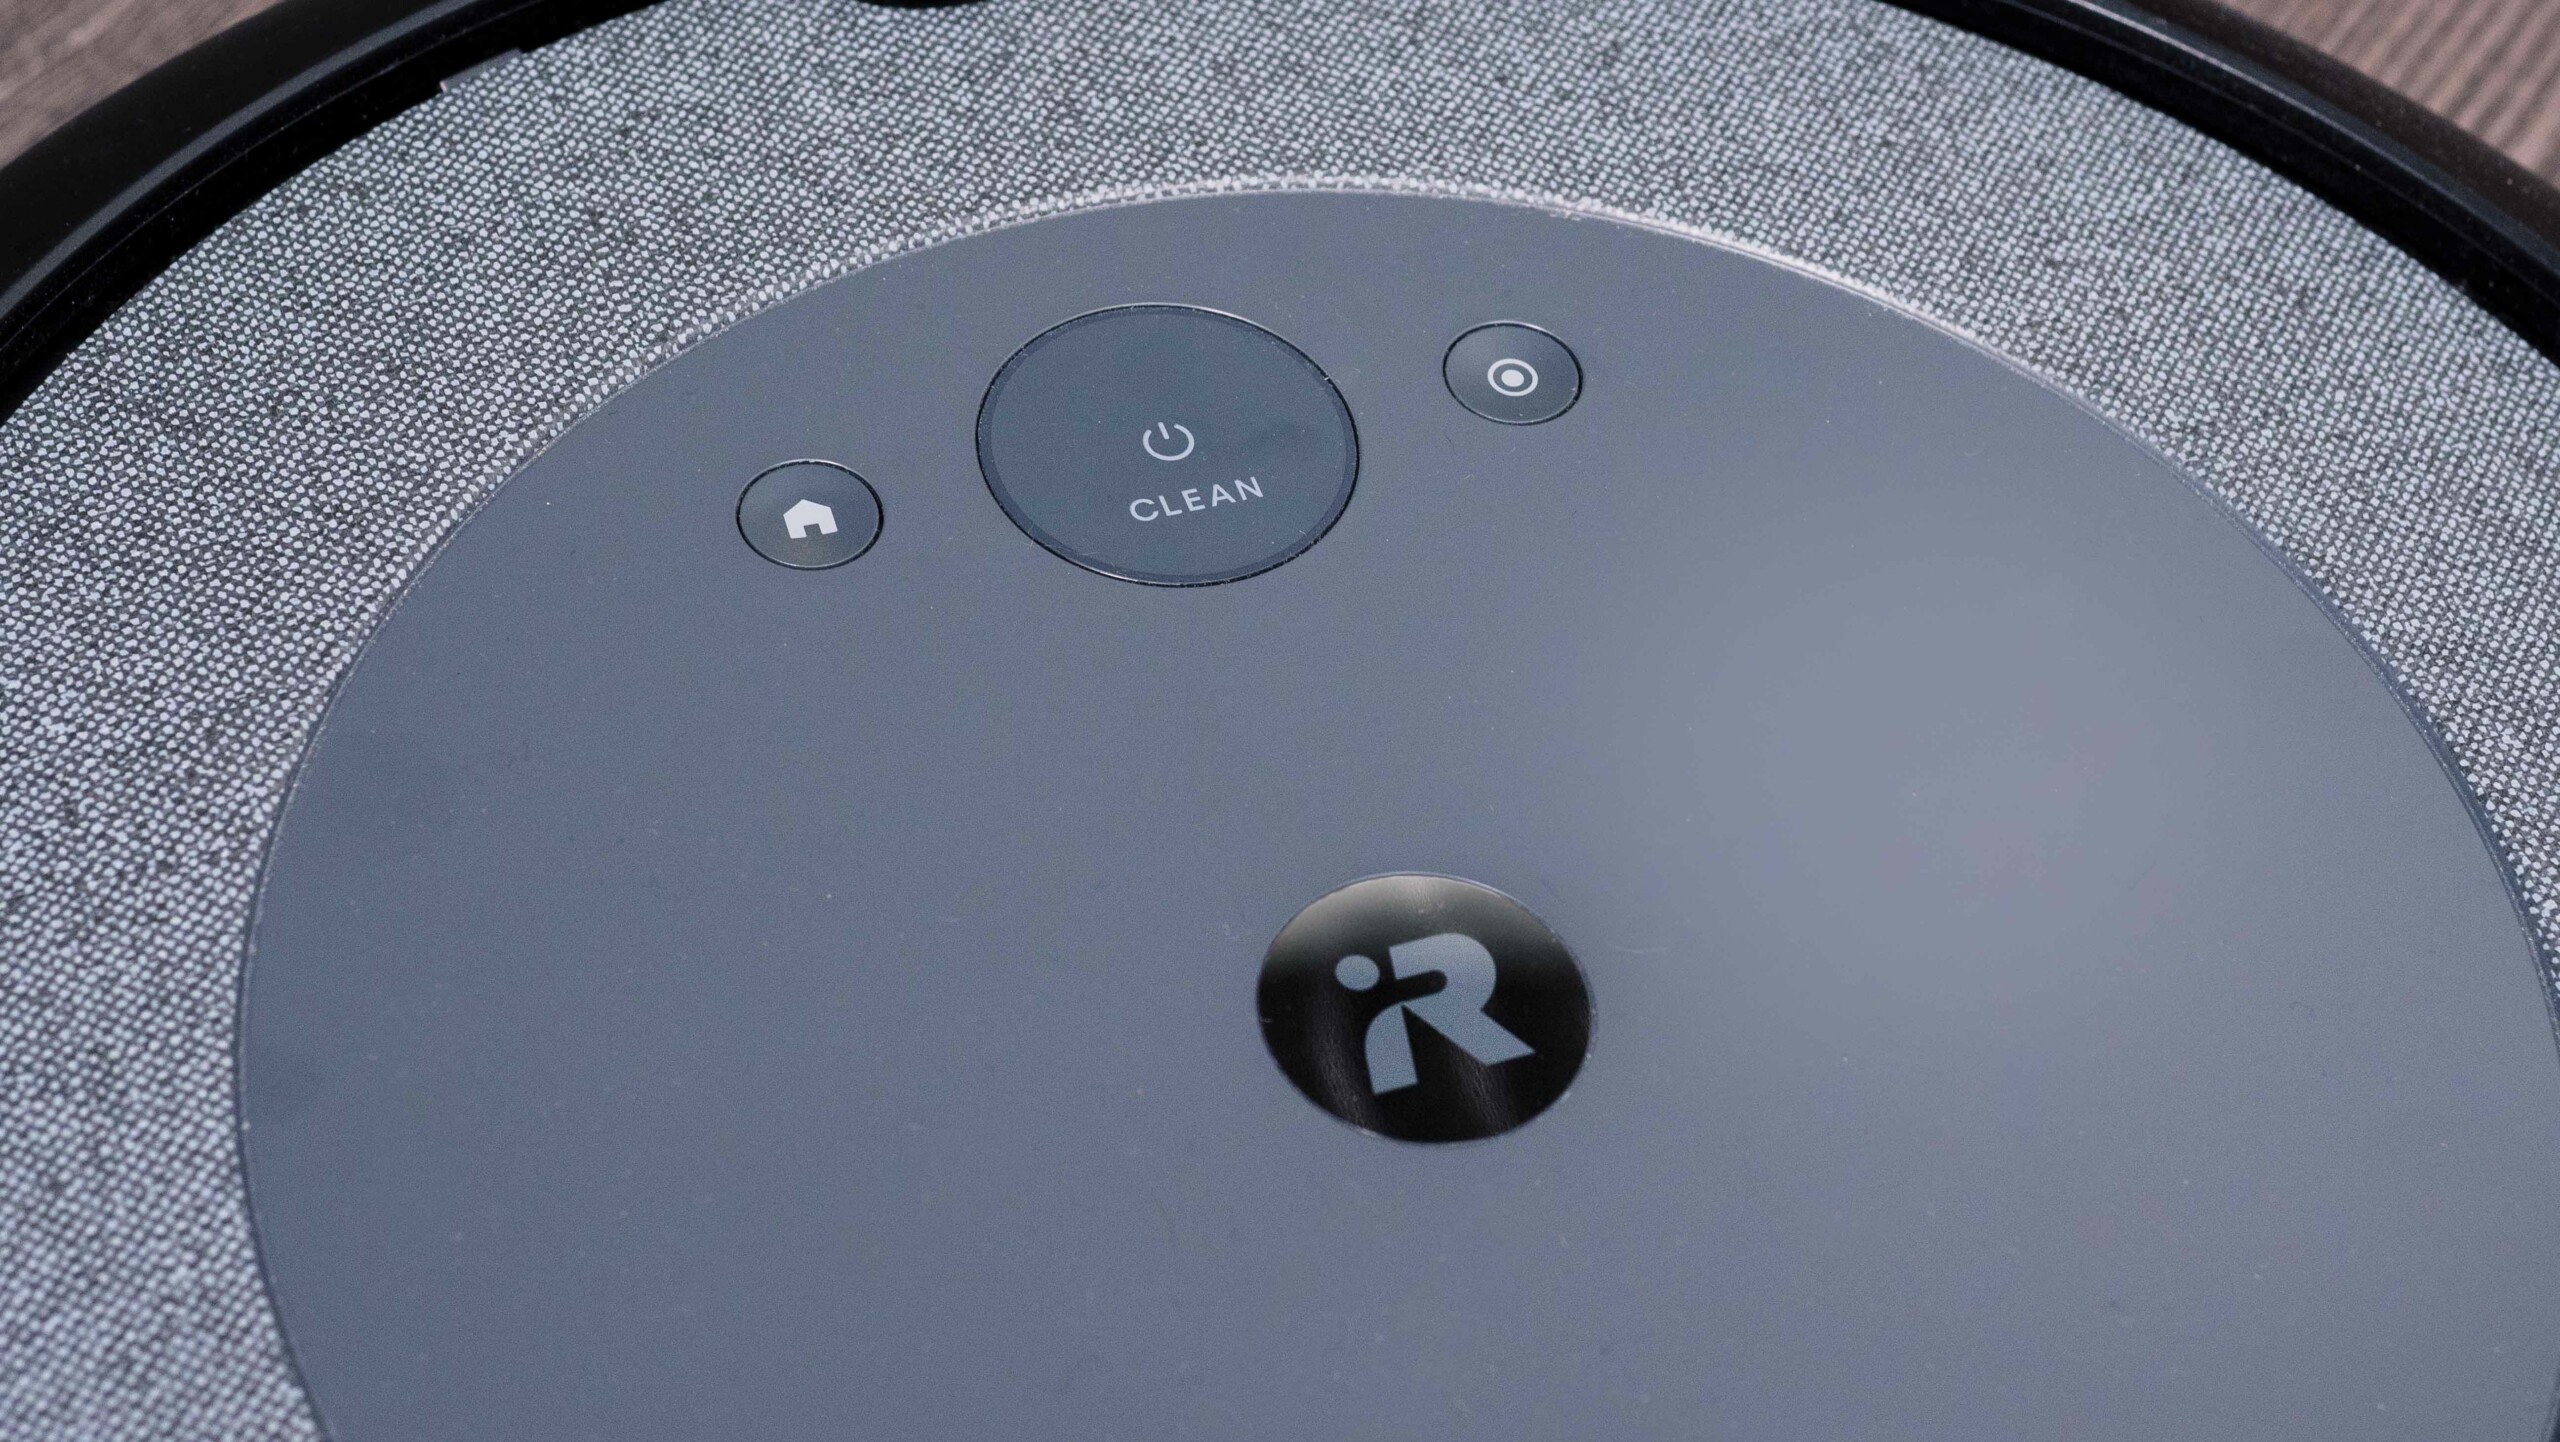 brade le Roomba i8 à son prix le plus bas (-33%) !